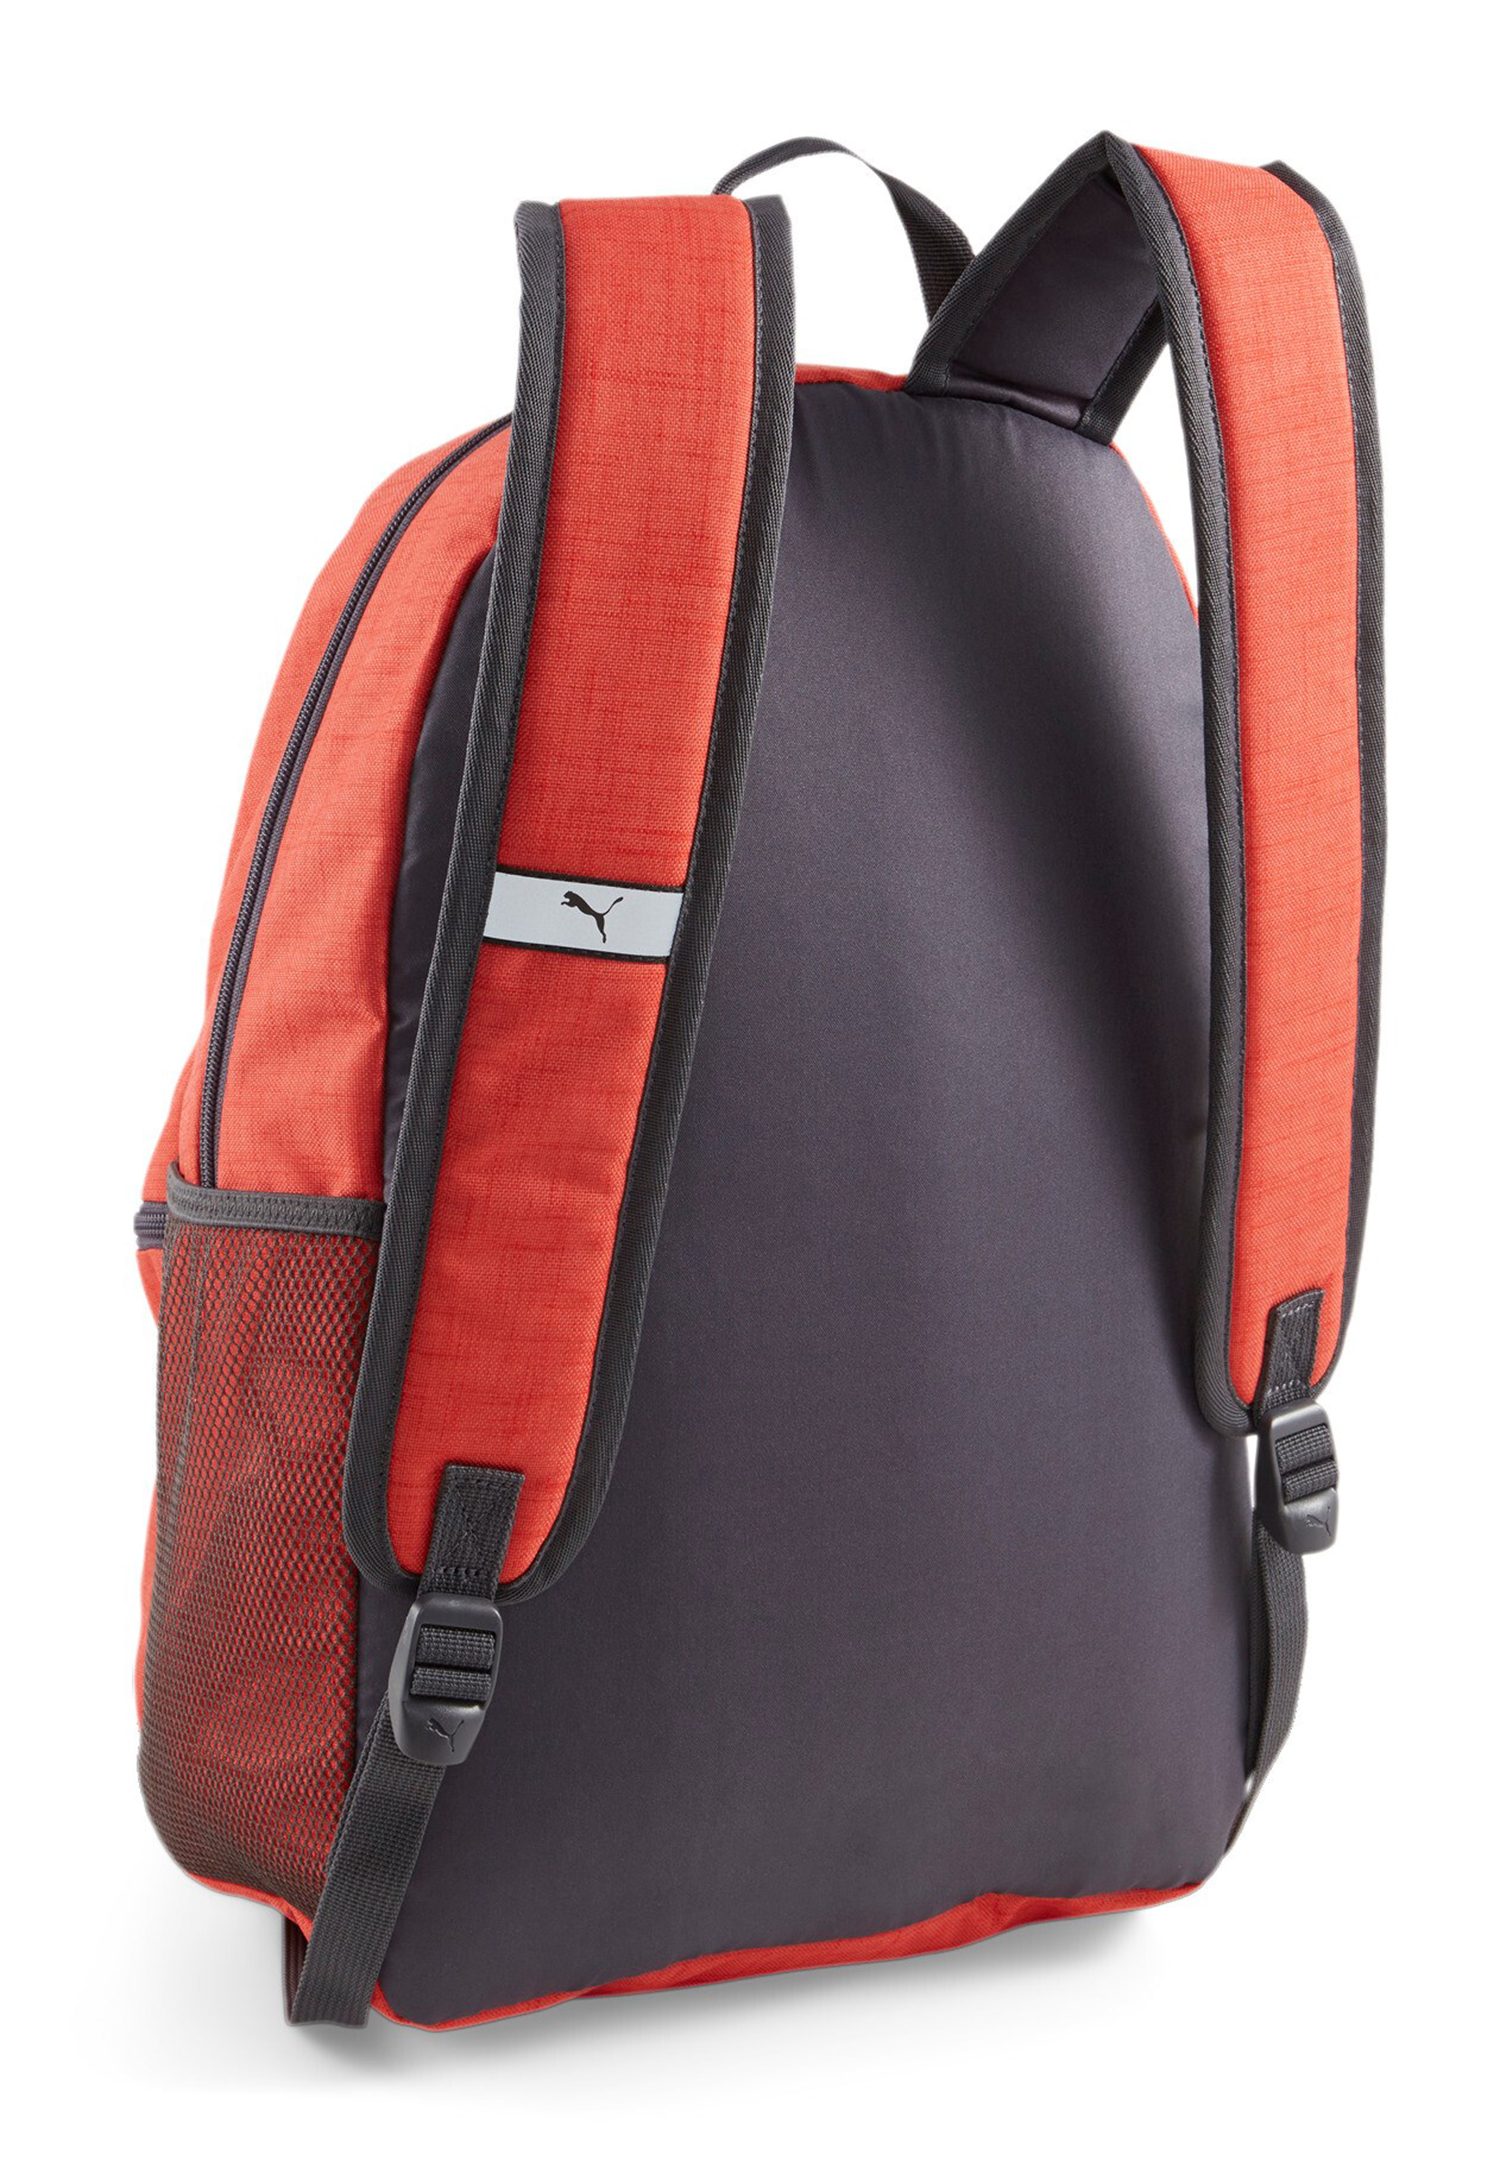 PUMA Phase Backpack III Rucksack Sport Freizeit Reise Schule 090118 02 rot   